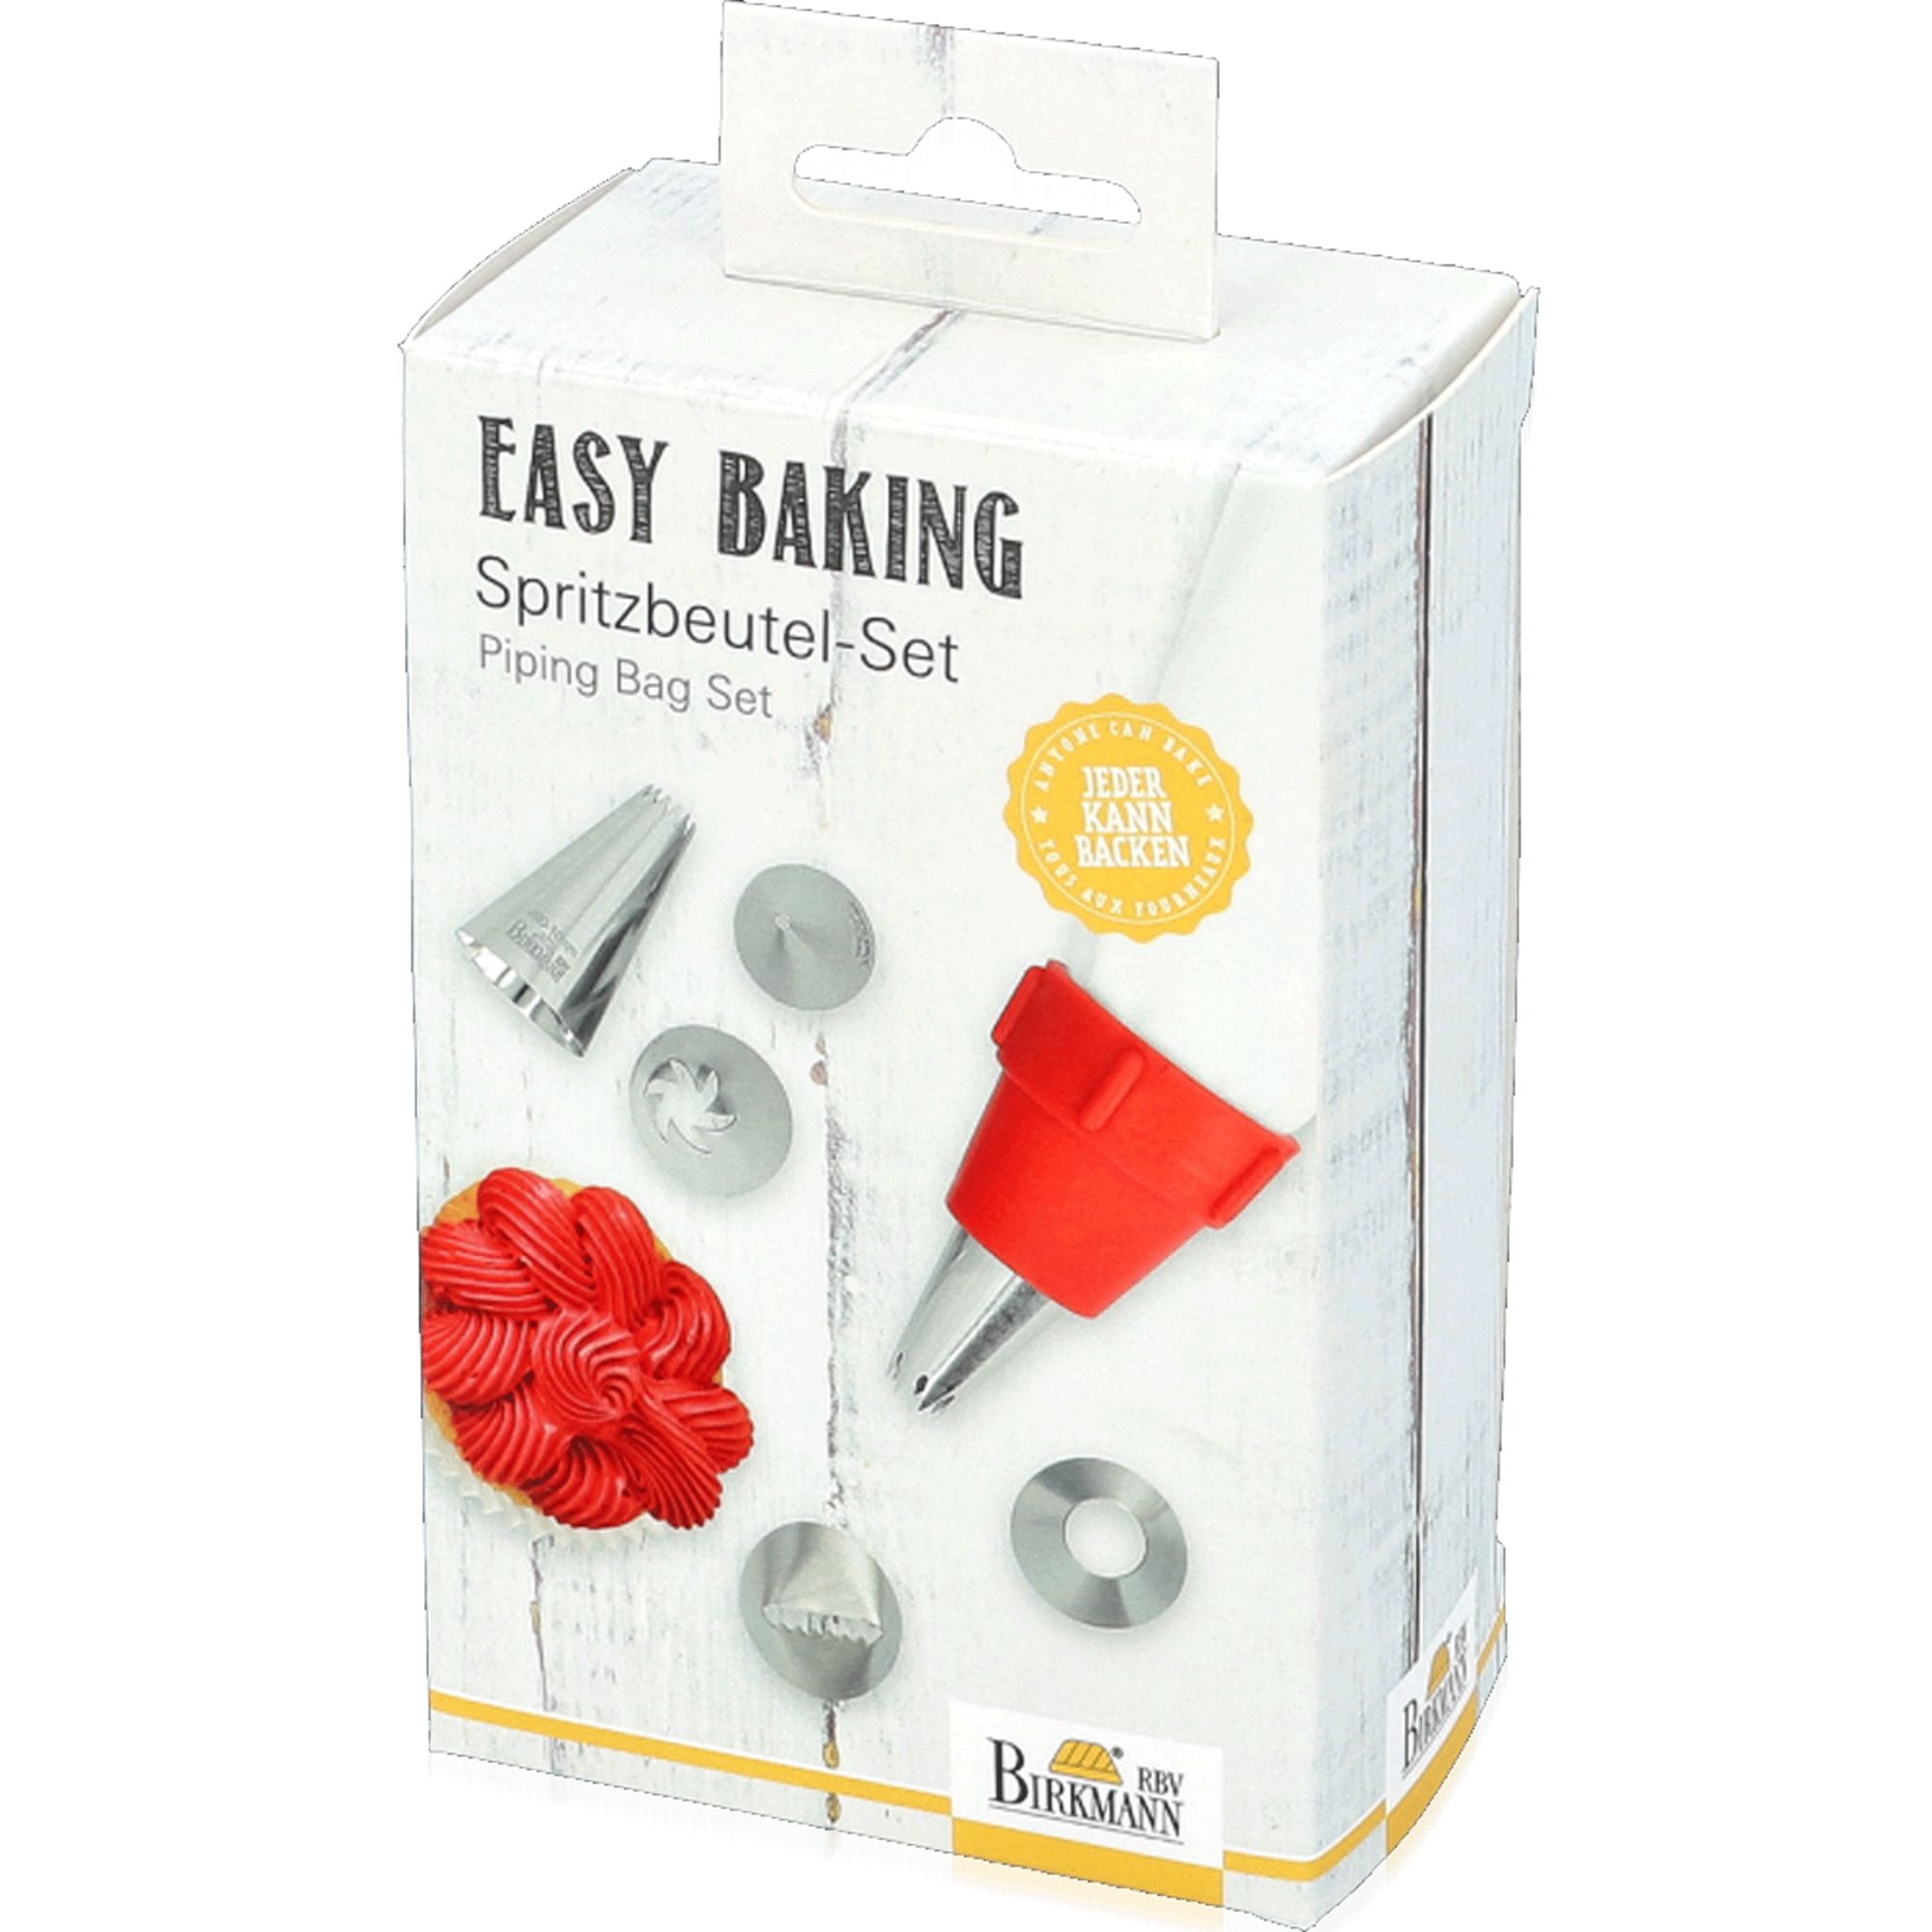 RBV Birkmann - Piping bag set, 8-piece. / Easy Baking